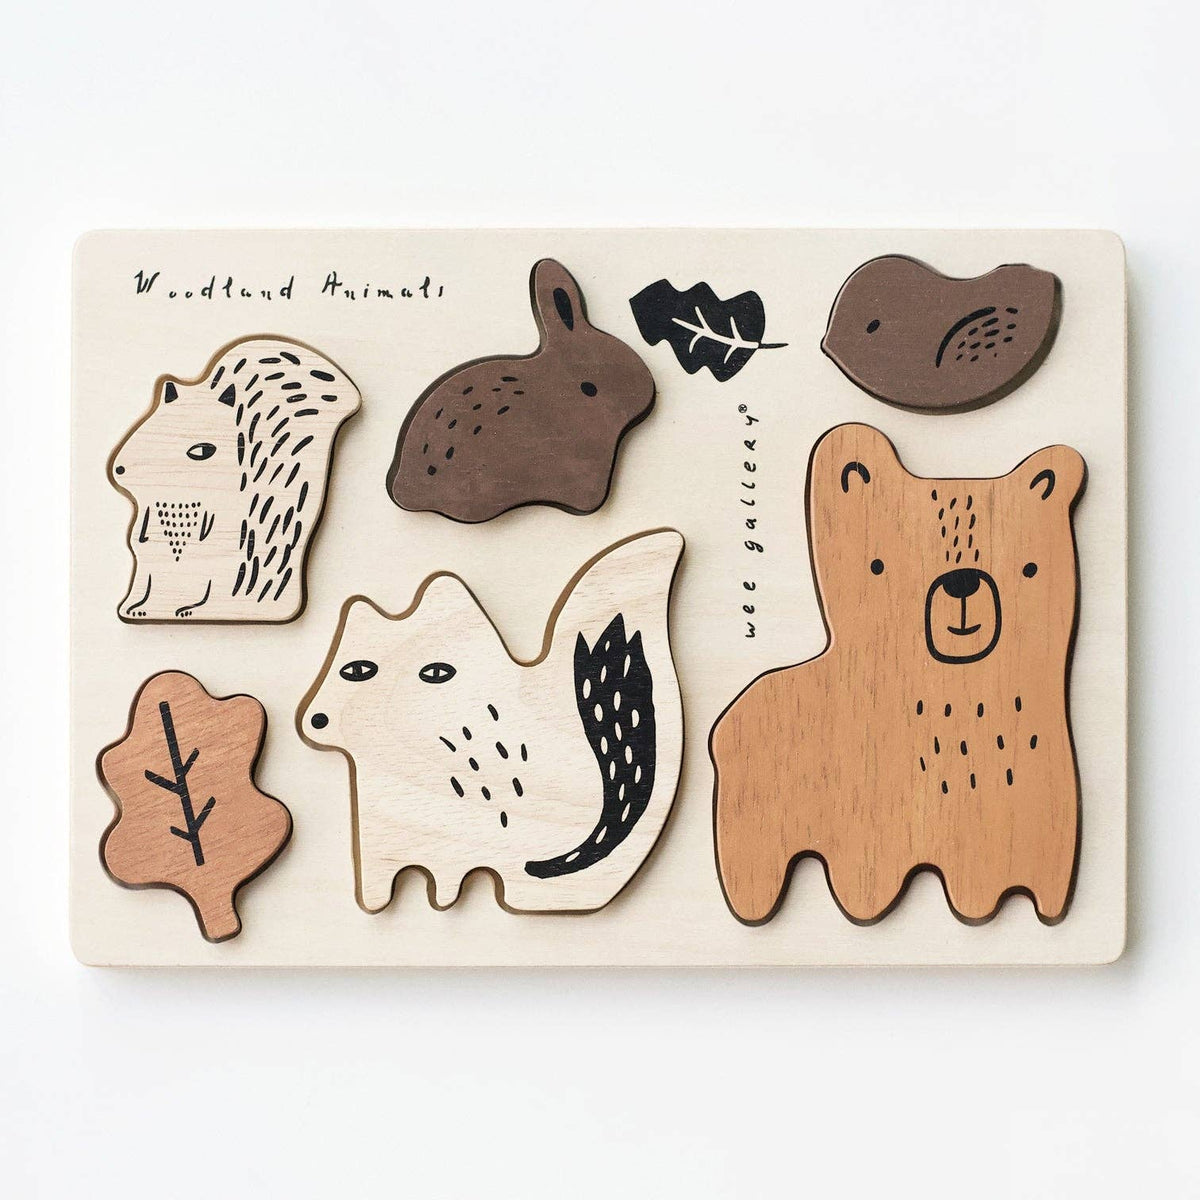 Woodland Animal Wooden Tray Puzzle